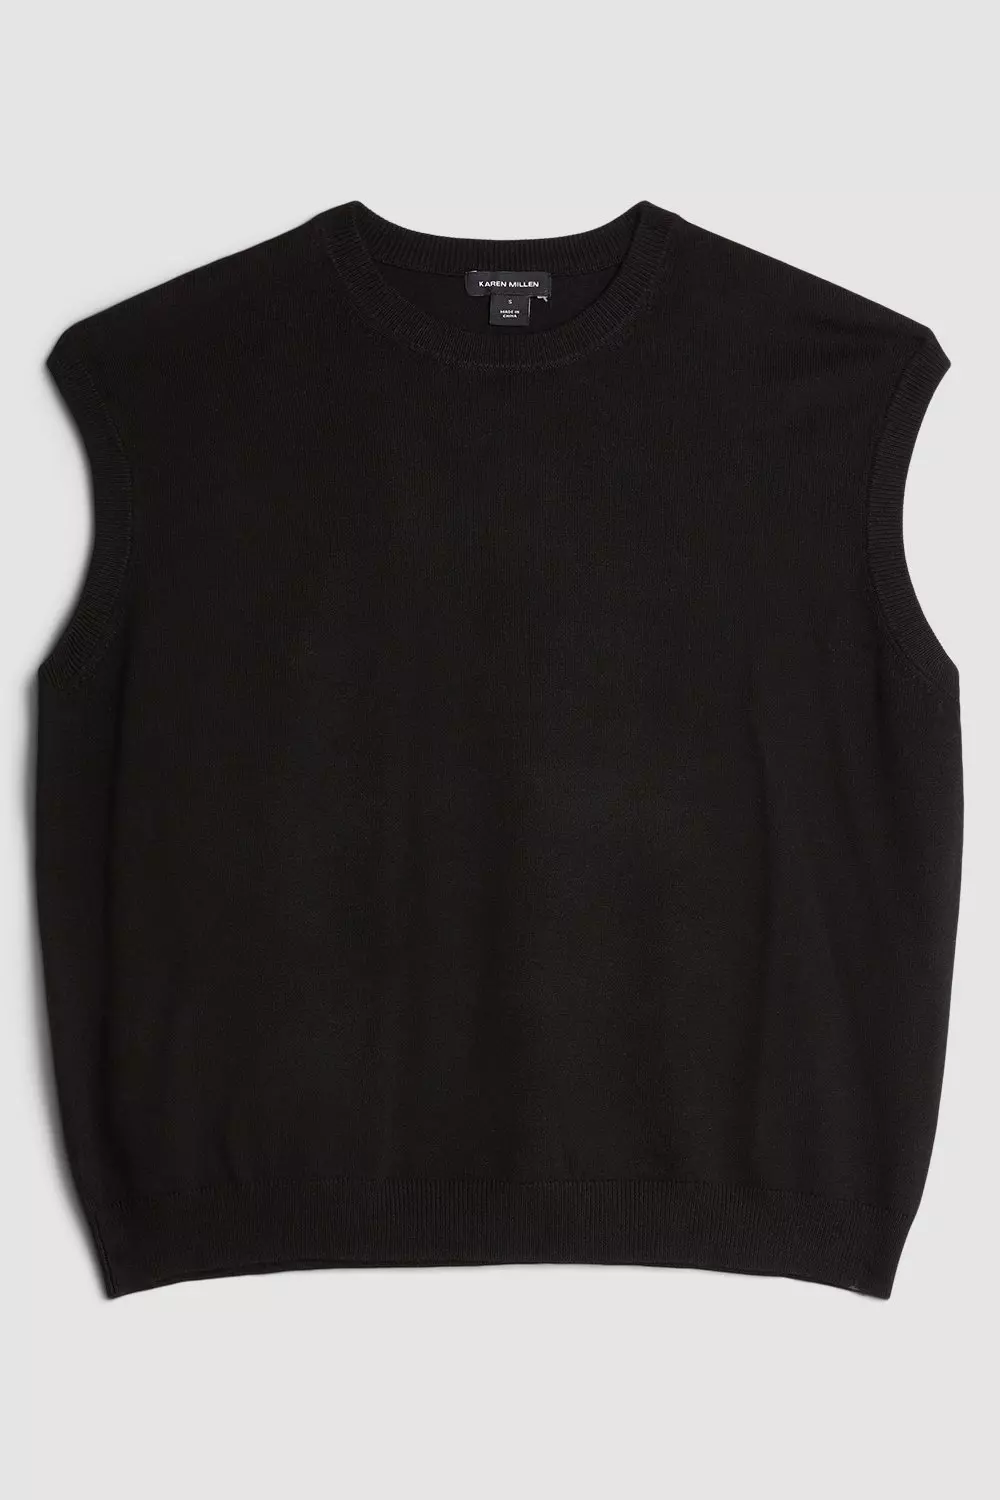 Sleeveless sweater in viscose blend - Black